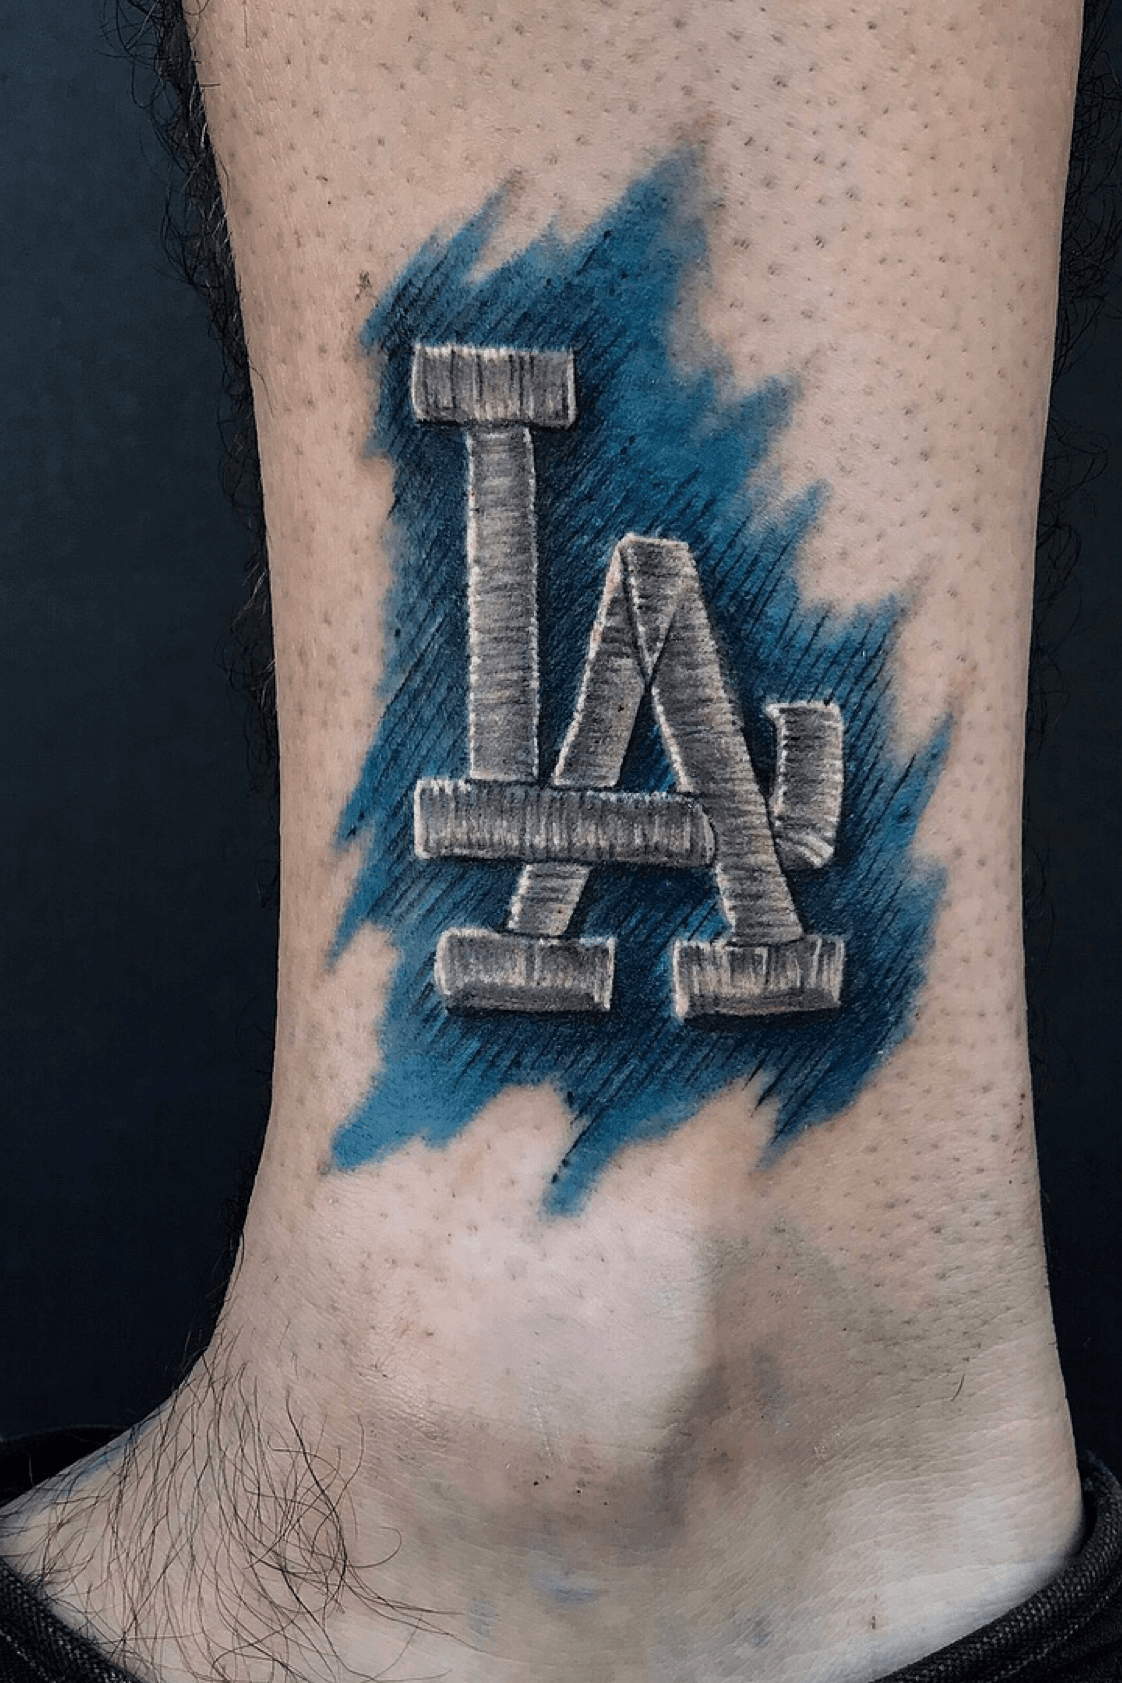 60 Los Angeles Dodgers Tattoos For Men  Baseball Ink Ideas  La tattoo  Tattoos Tattoos for guys